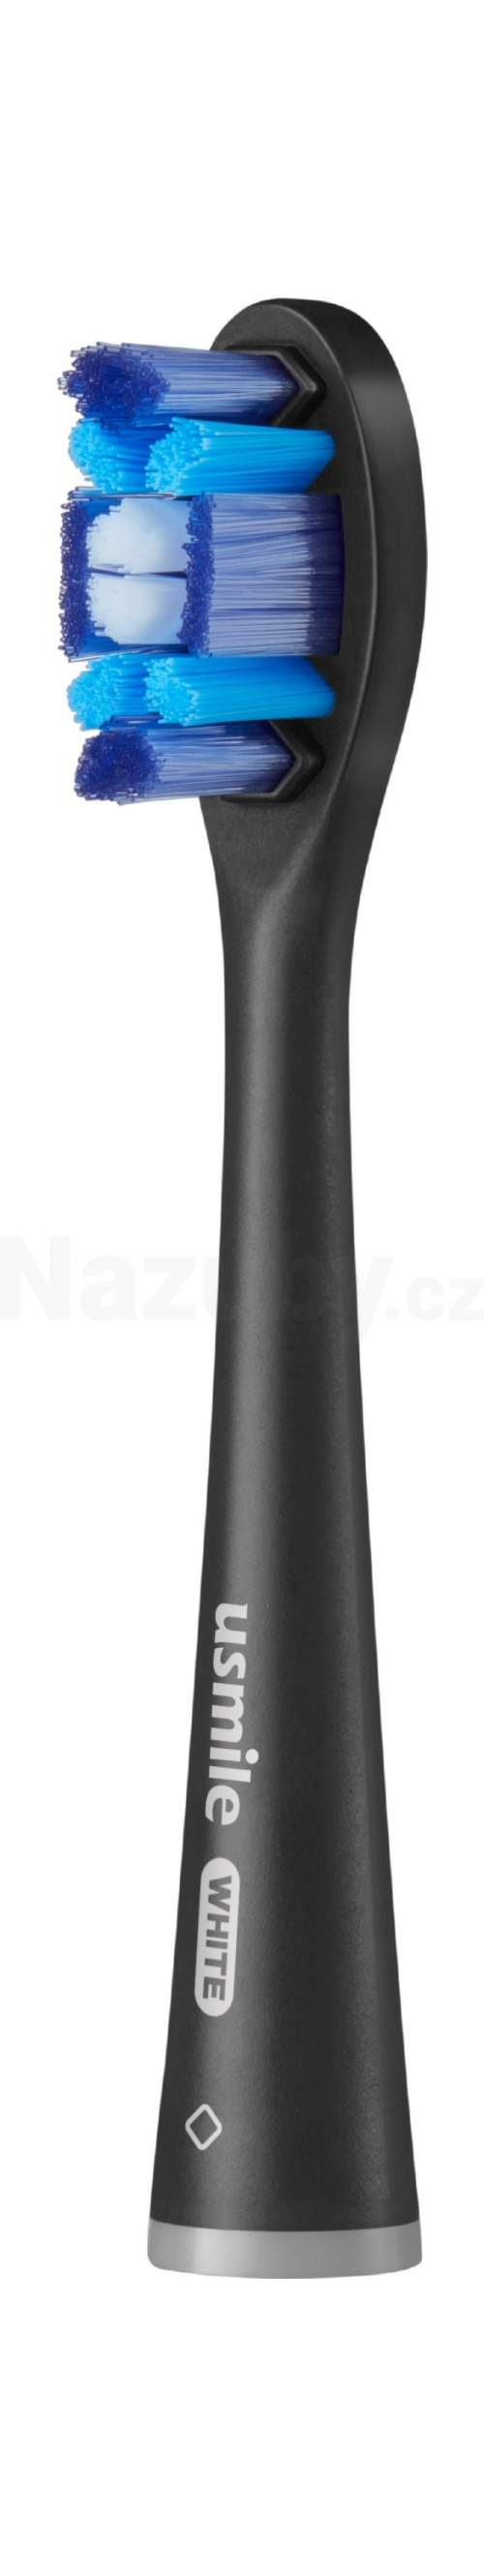 USMILE Whitening Pro Brush Head - Black 4ks HADLUSWPBH052